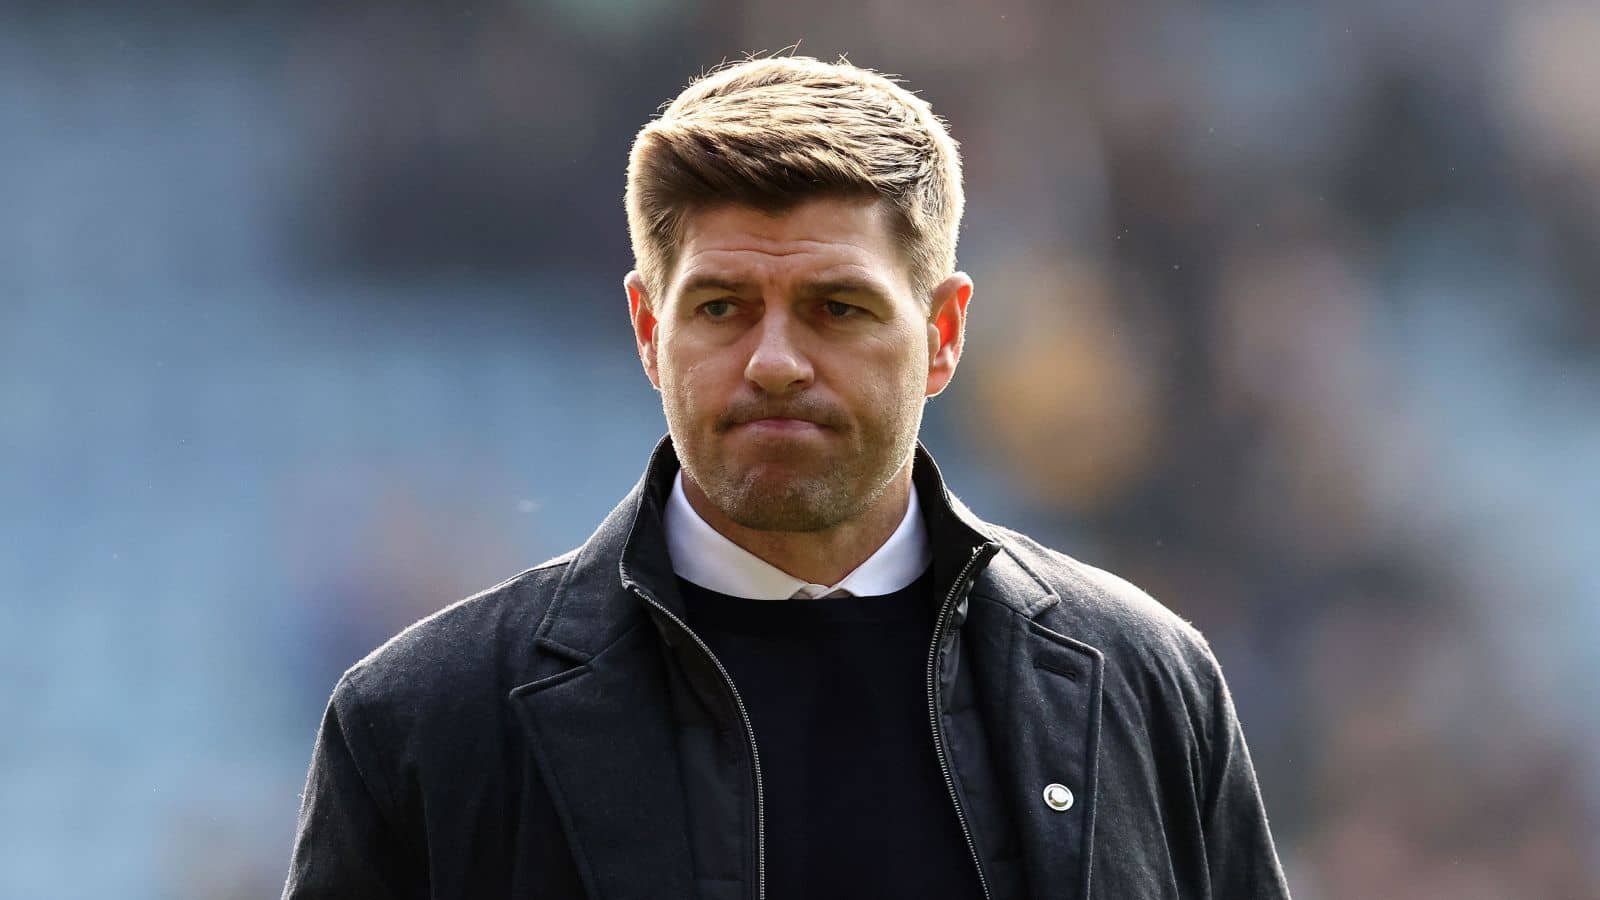  Antrenorul Steven Gerrard a fost demis de la Aston Villa